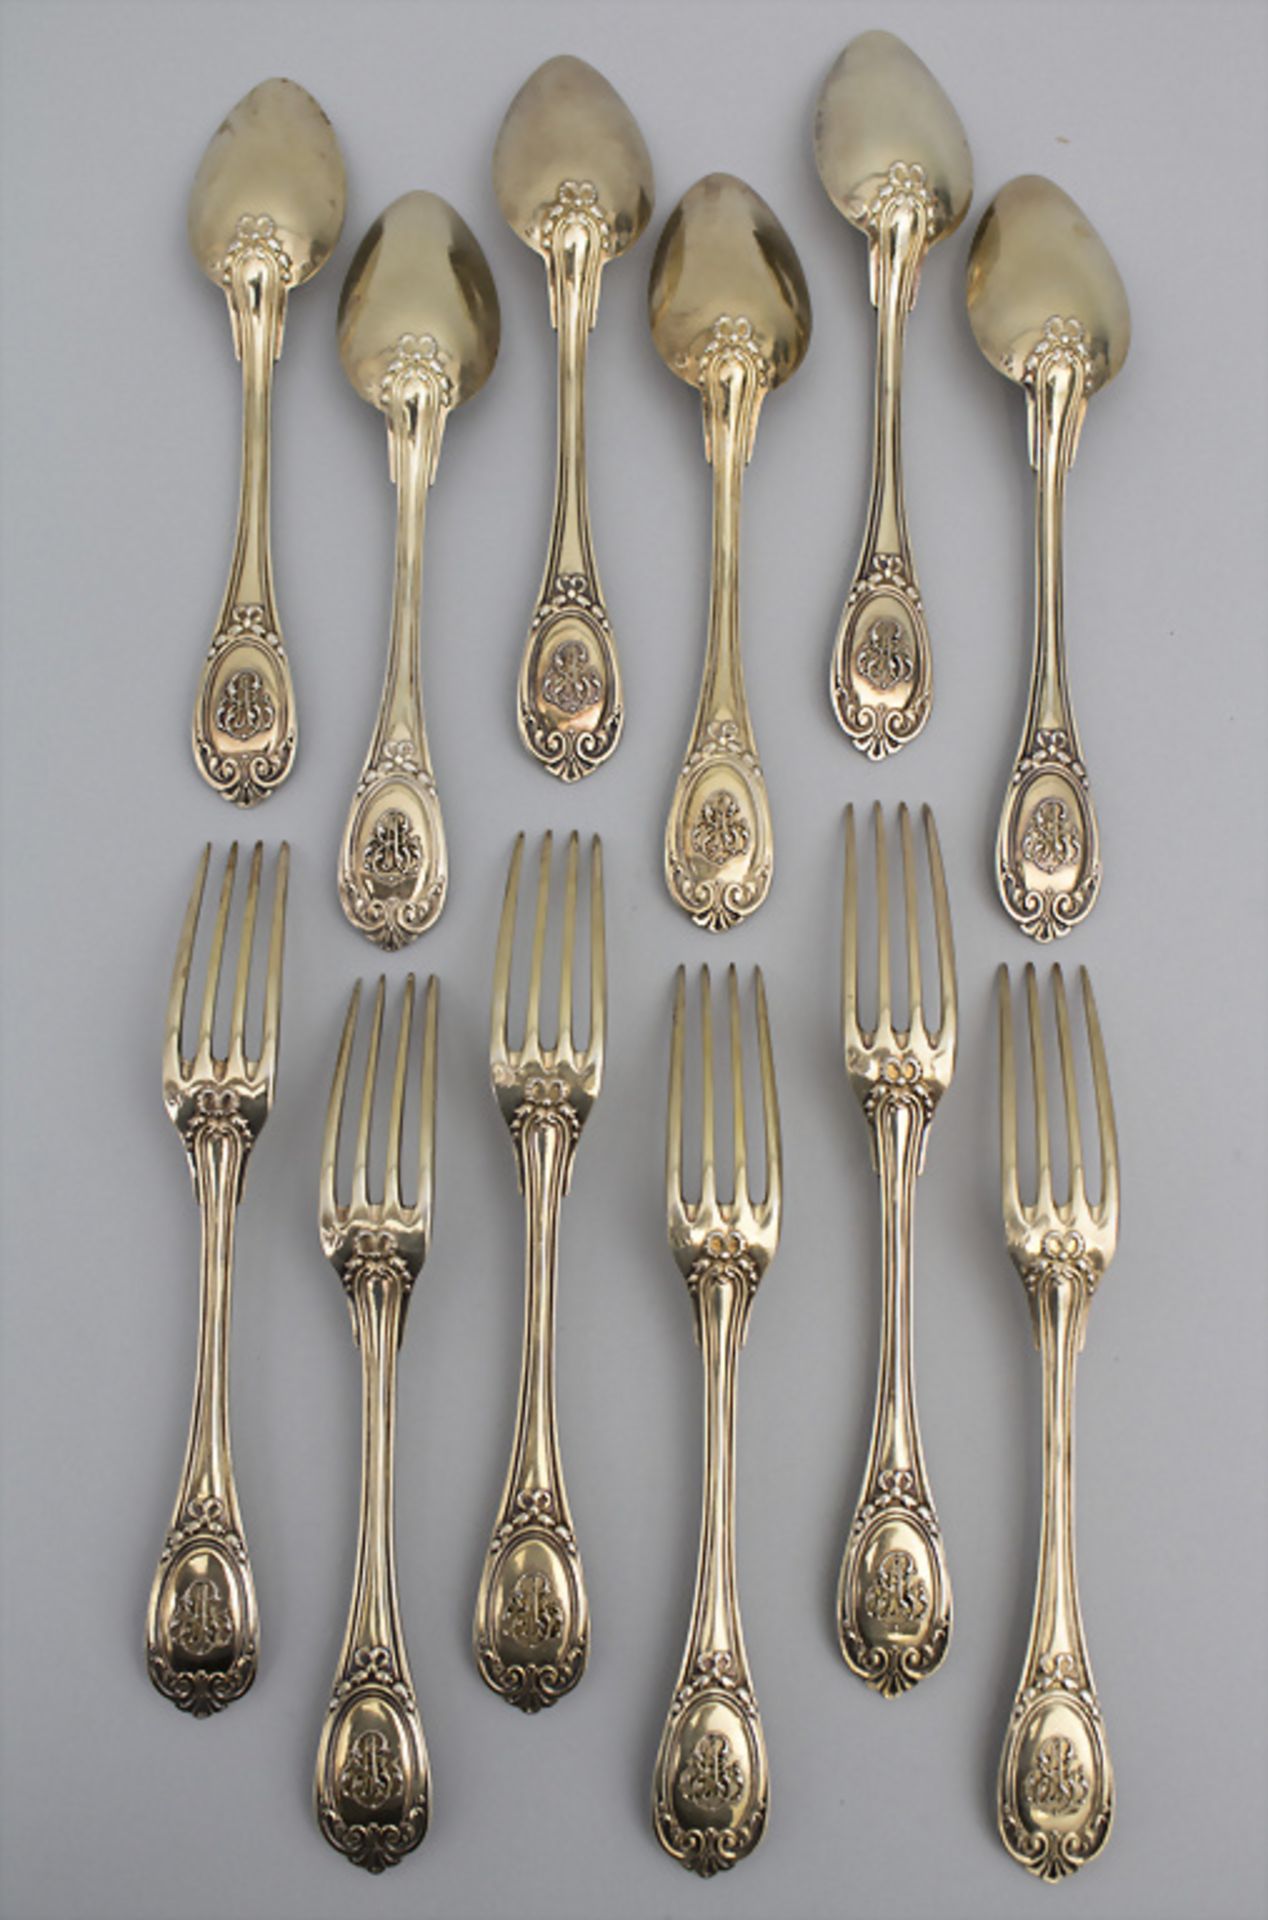 12-teiliges Silberbesteck / A 12-part silver cutlery, Veyrat, Paris, um 1900 - Image 2 of 8